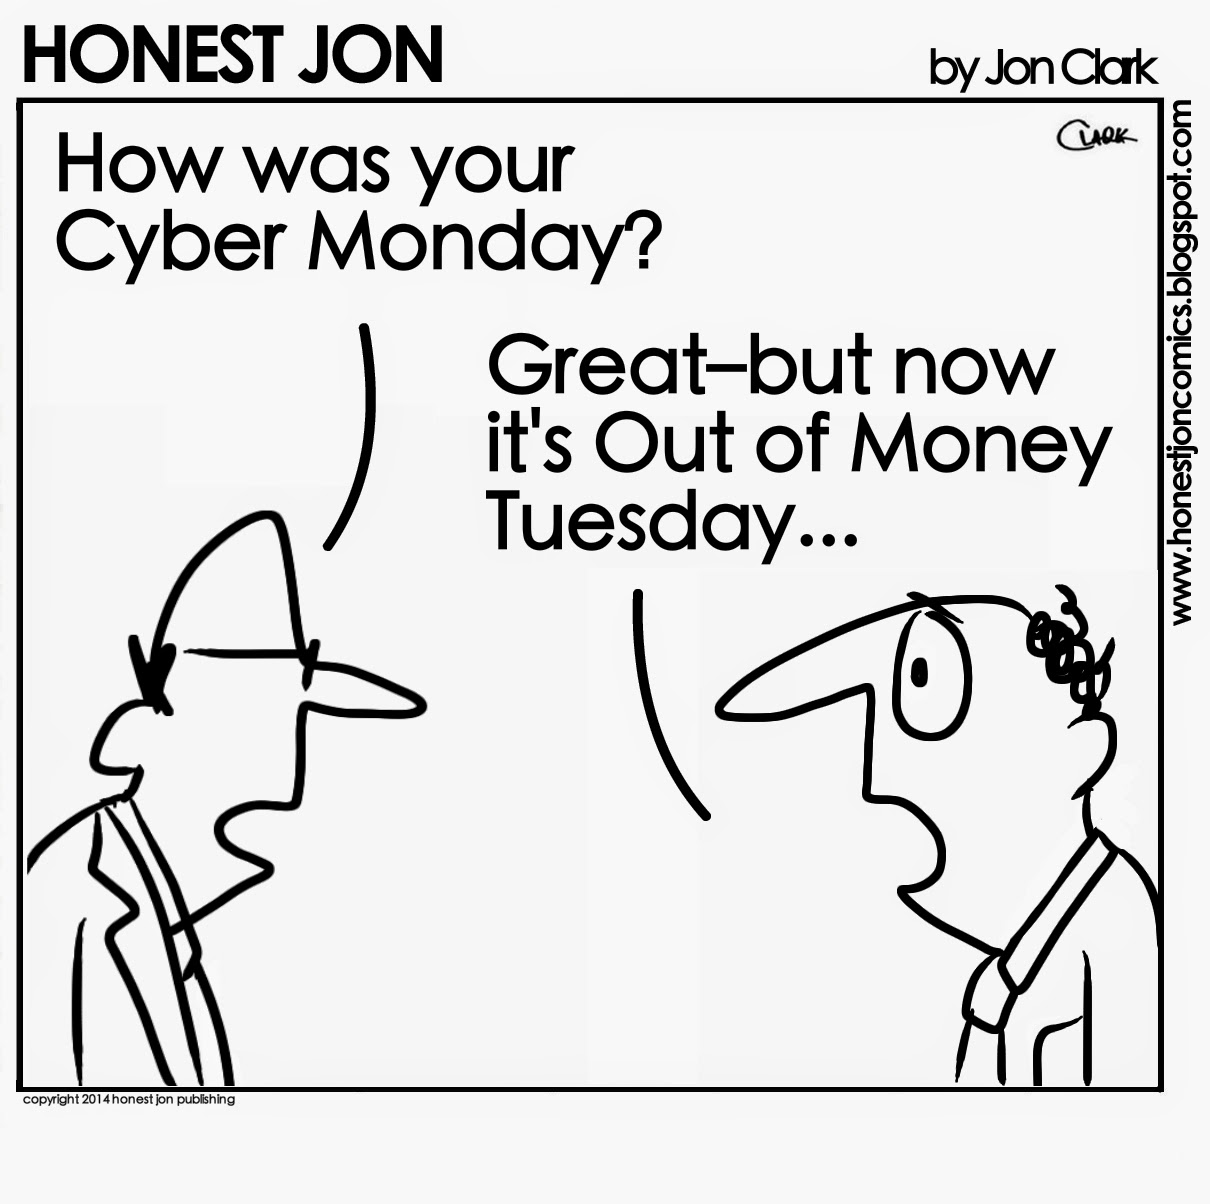 HONEST JON: Day after Cyber Monday...